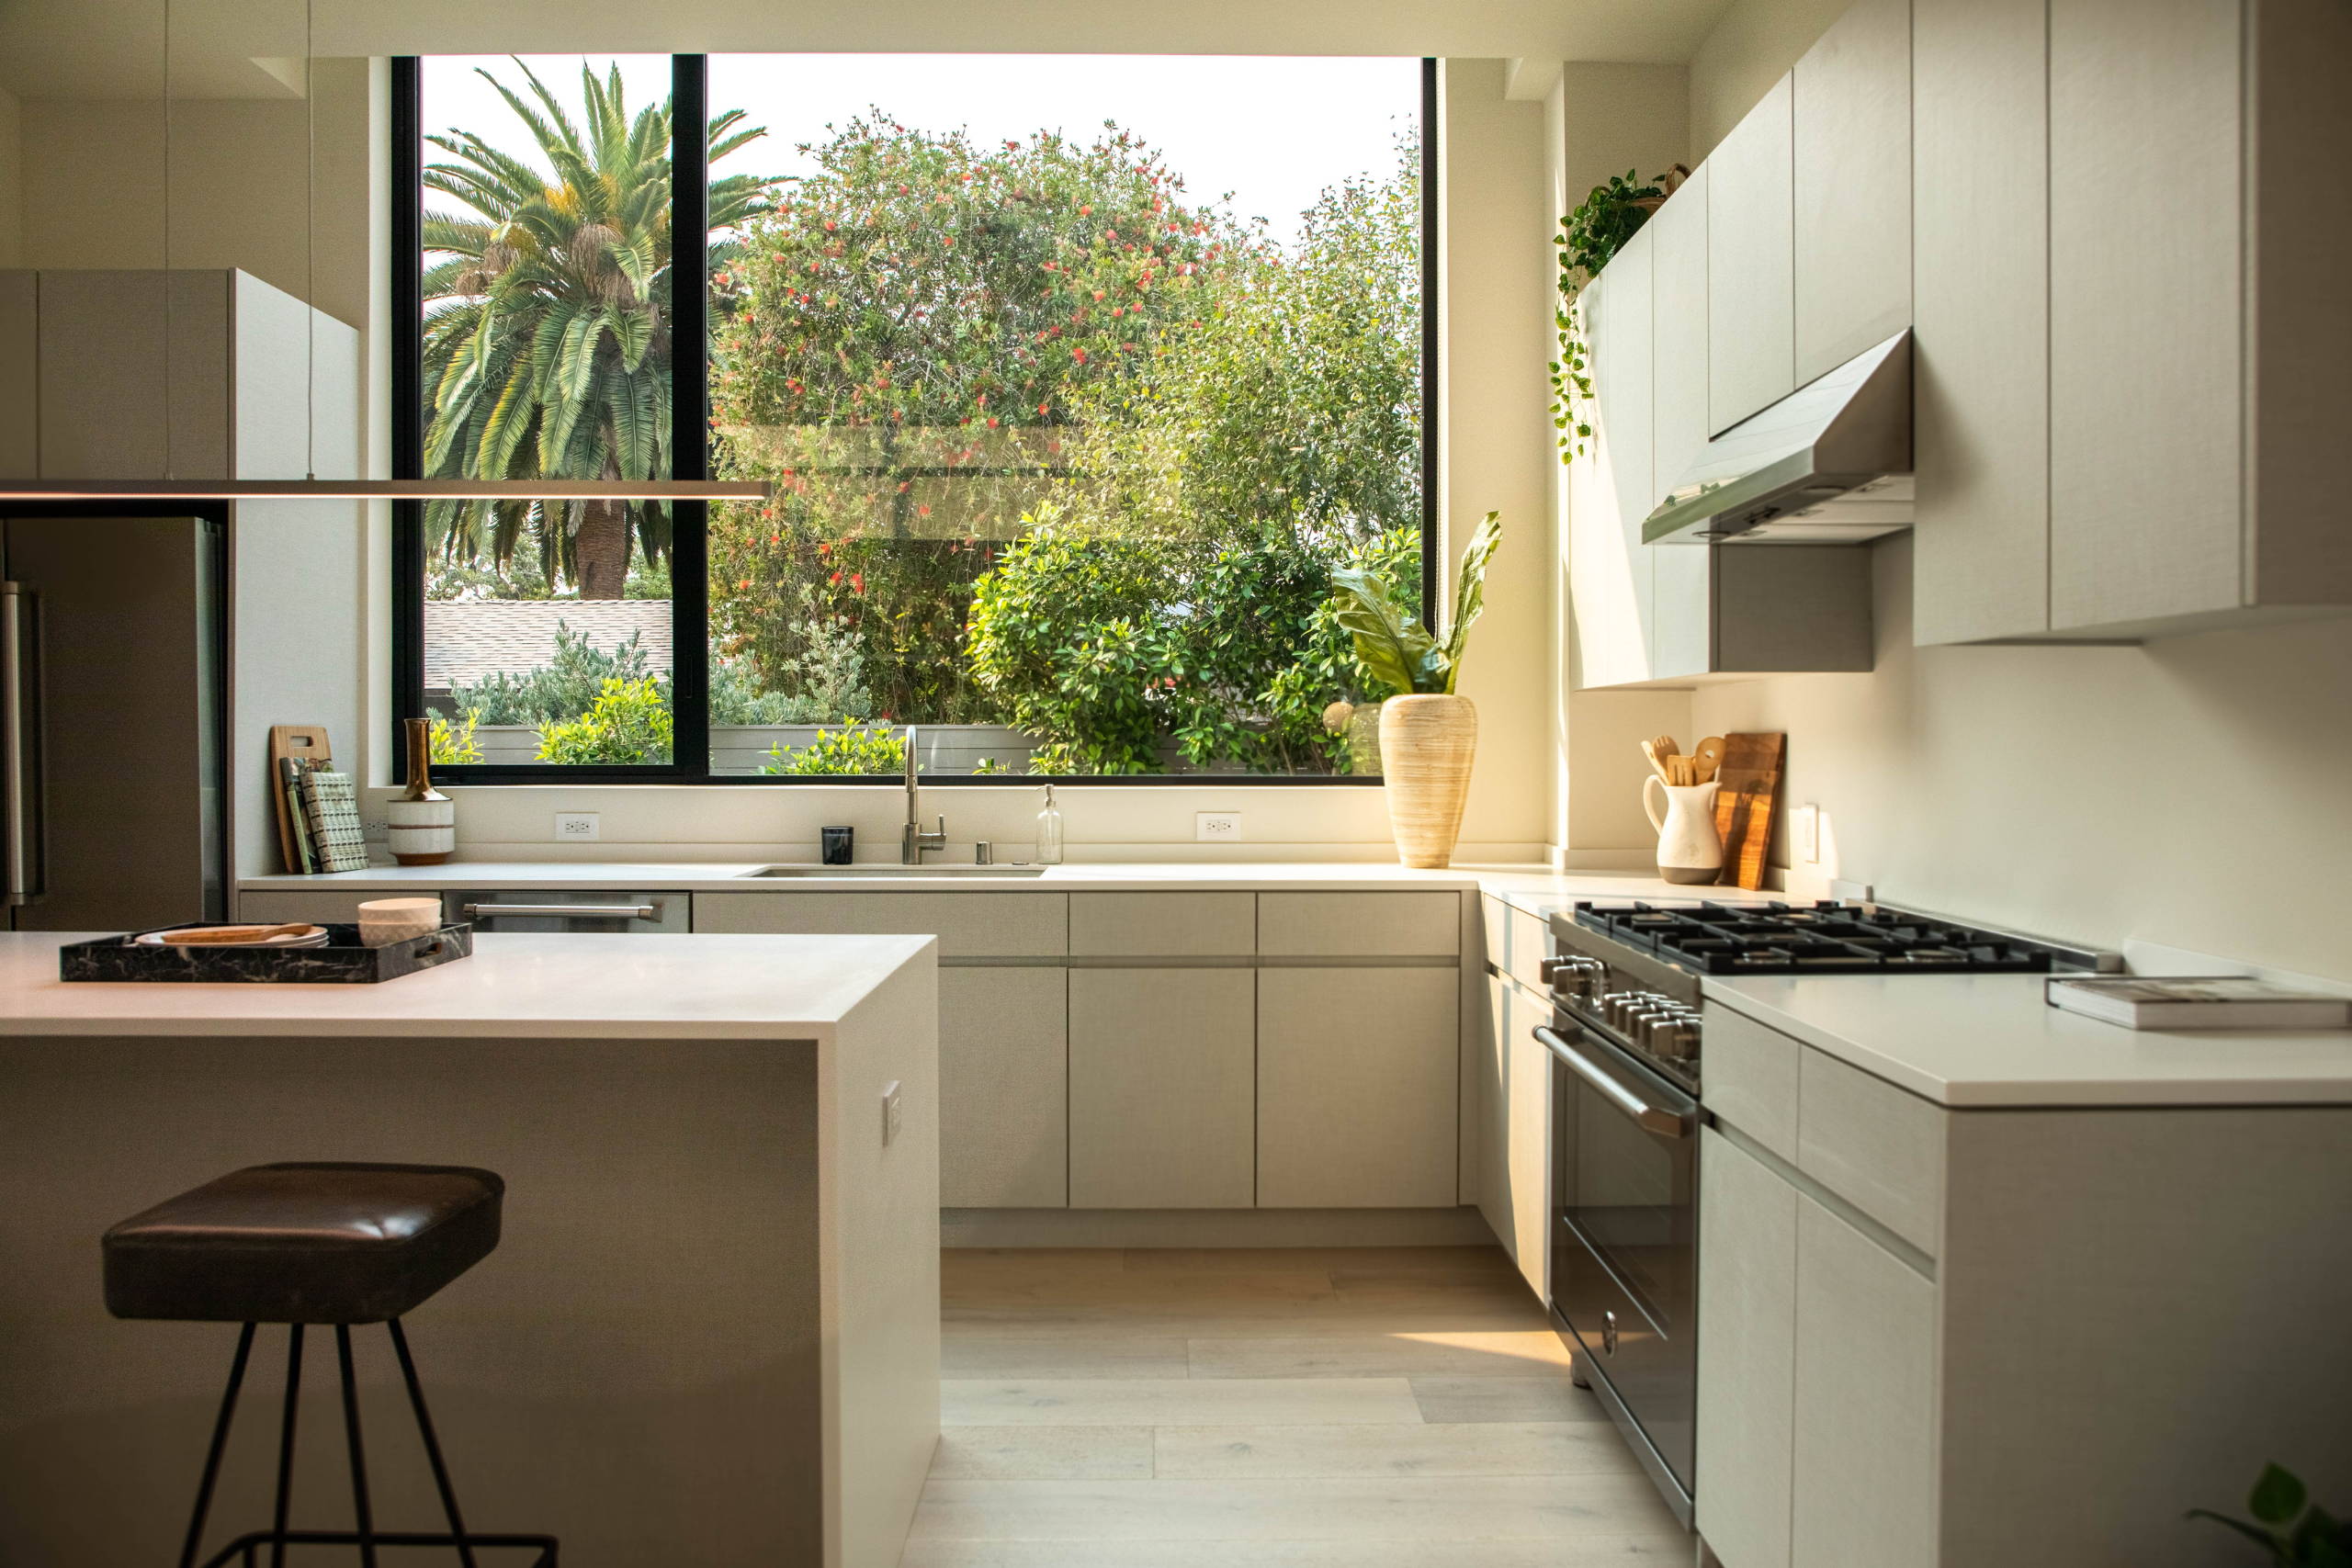 Modern, neutral toned kitchen. 